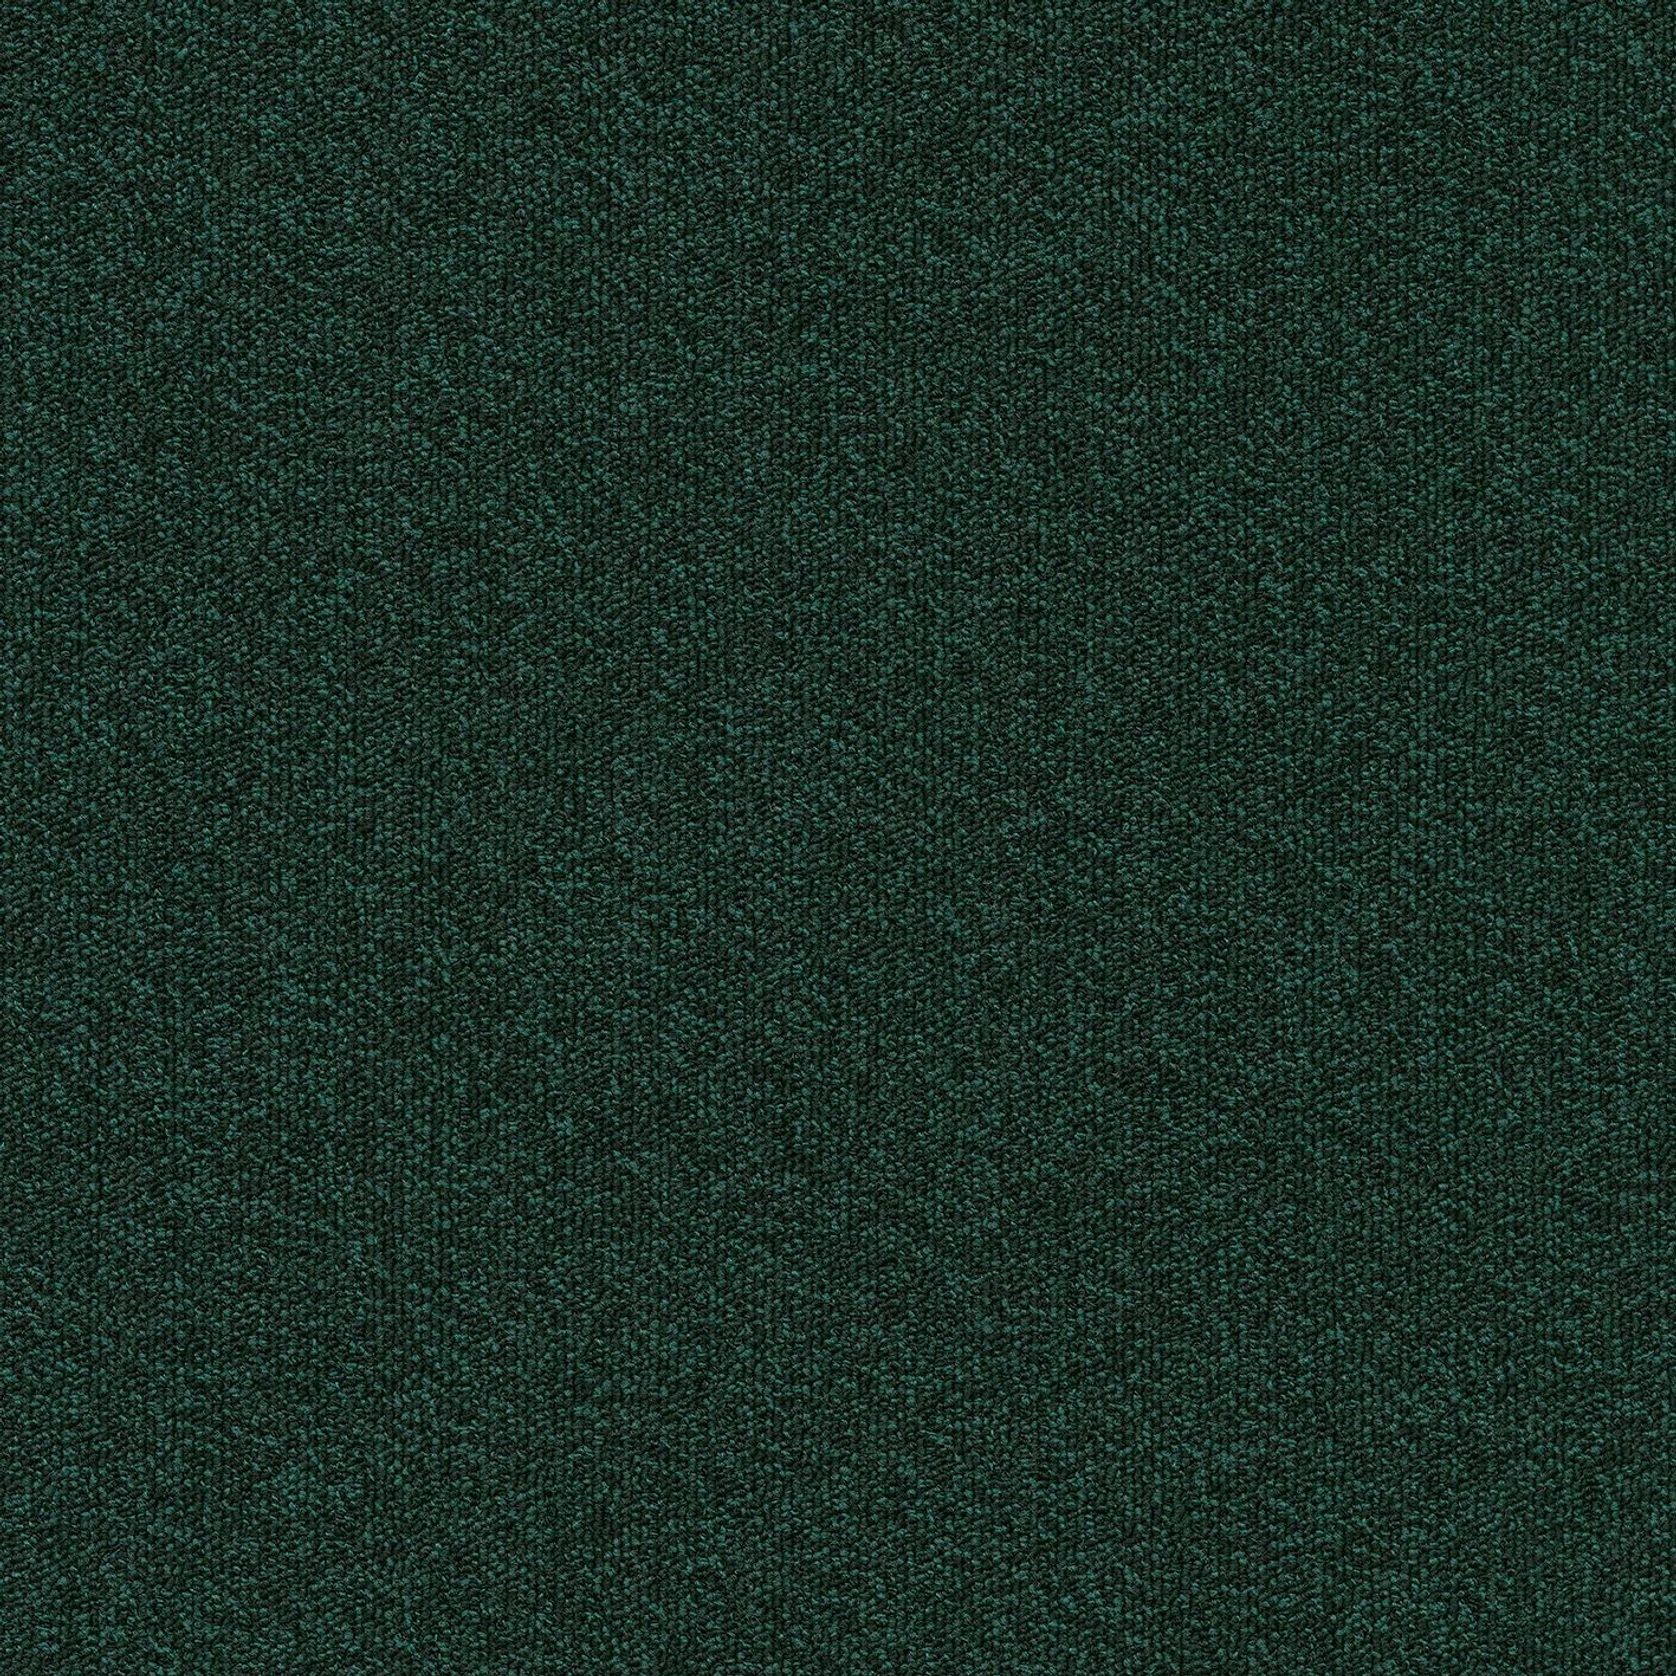 modulyss® - 03 Millennium Nxtgen carpet tiles gallery detail image